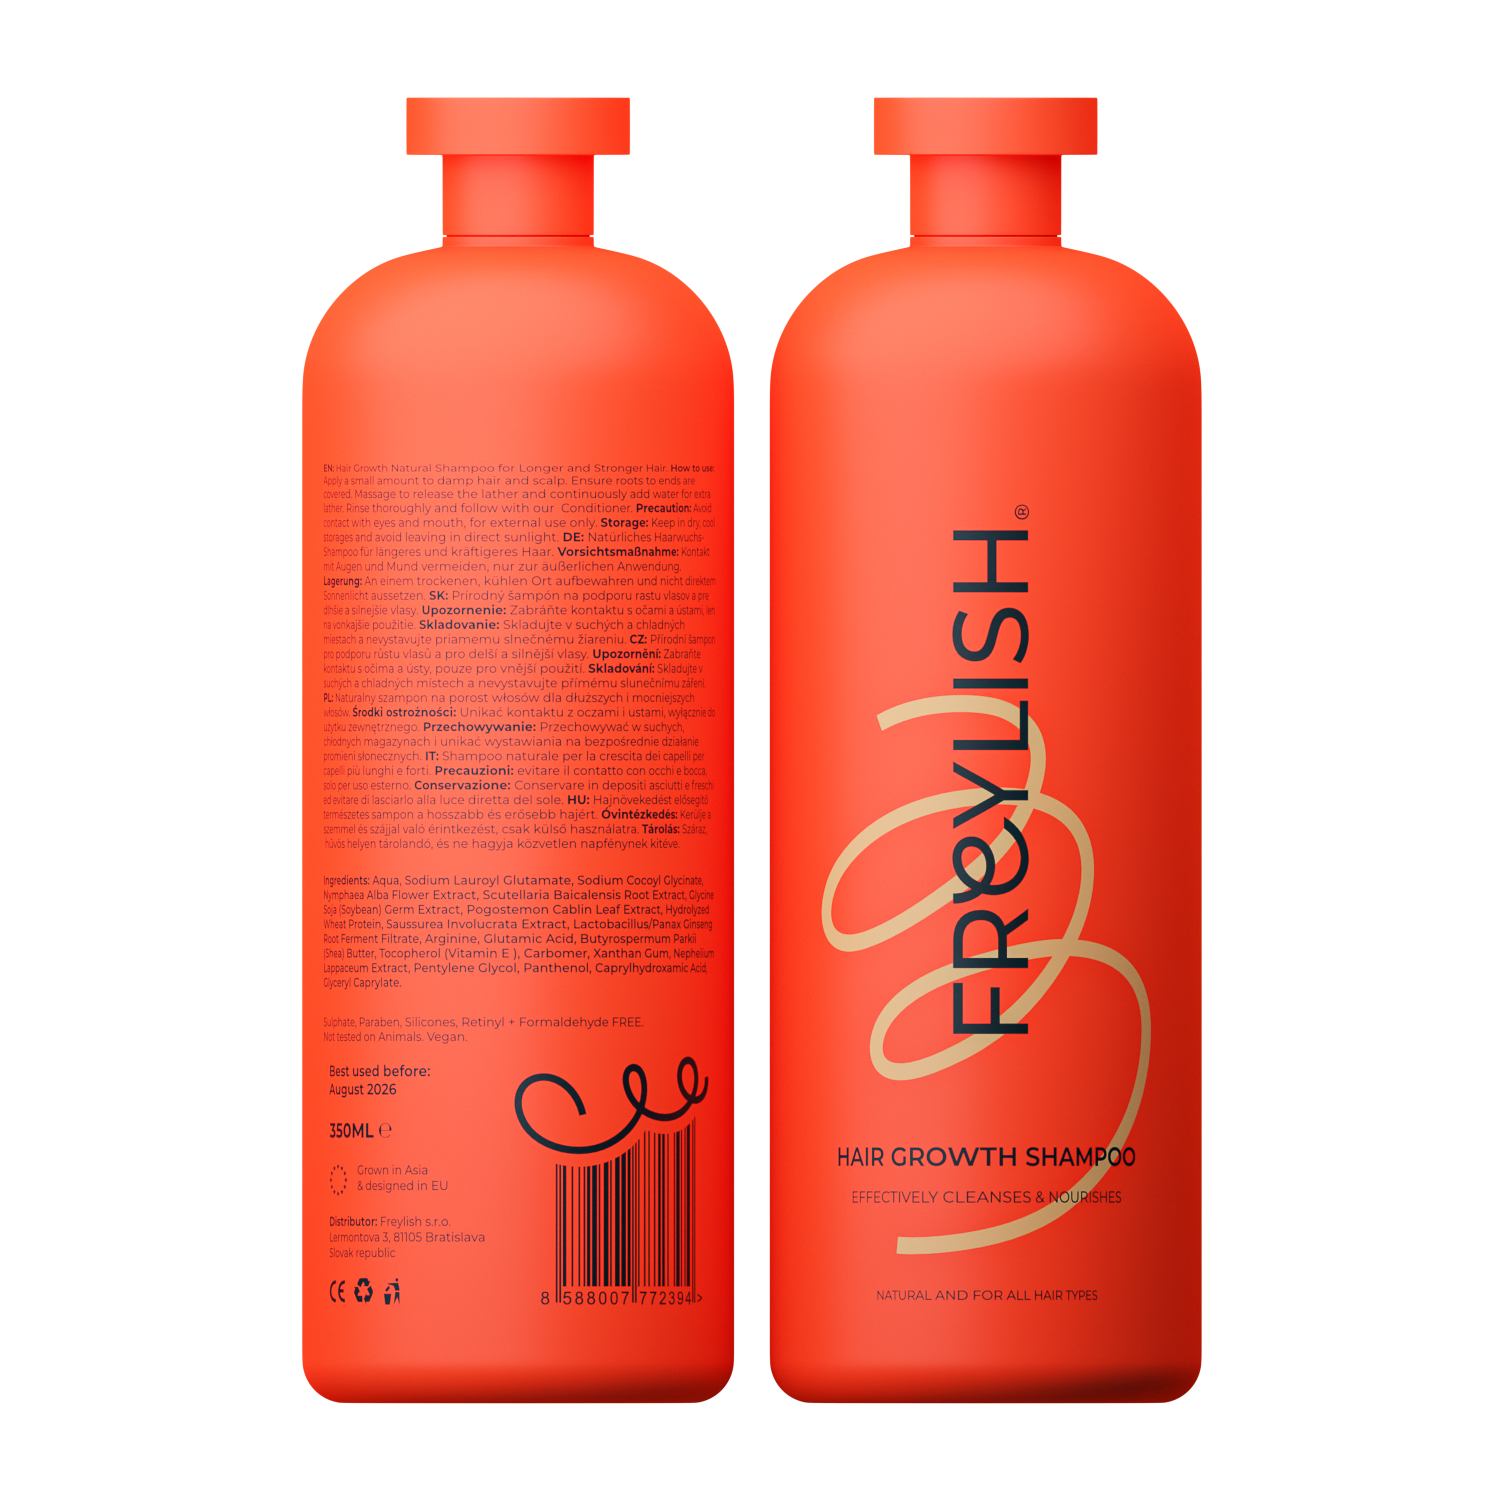 Freylish® Hair Growth Shampoo